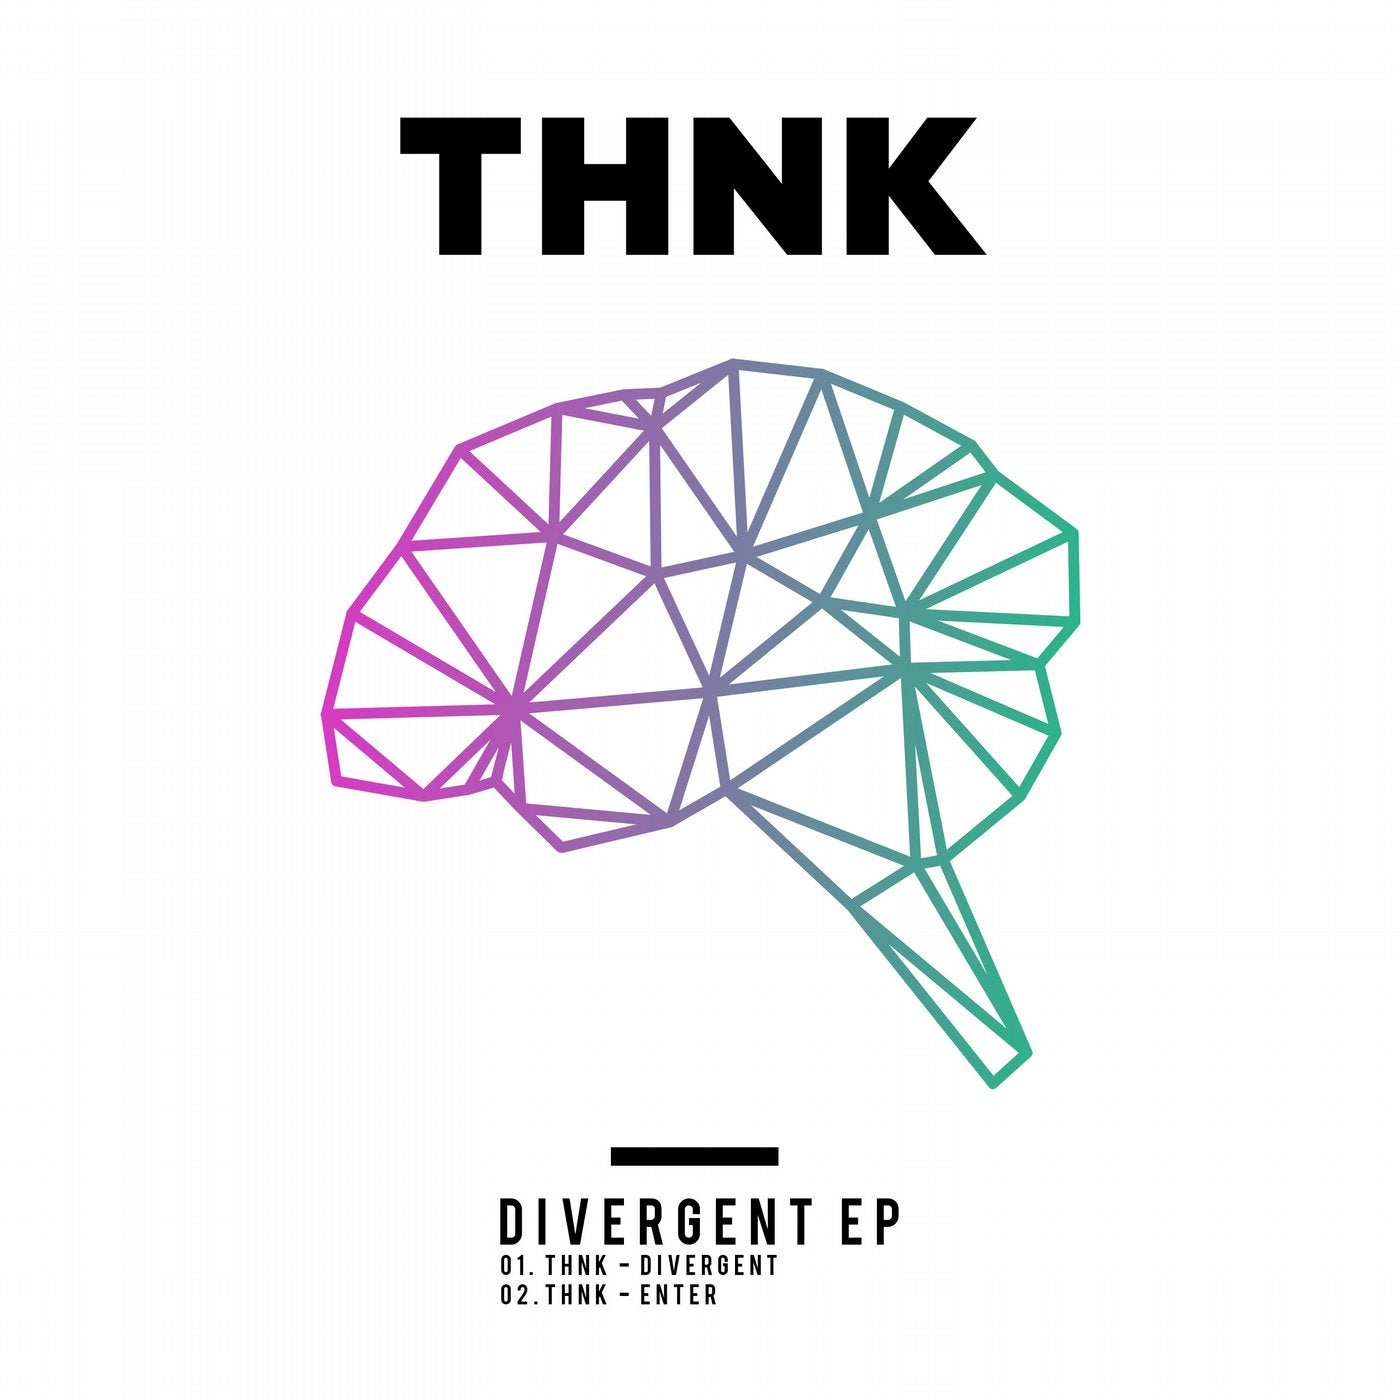 Divergent EP